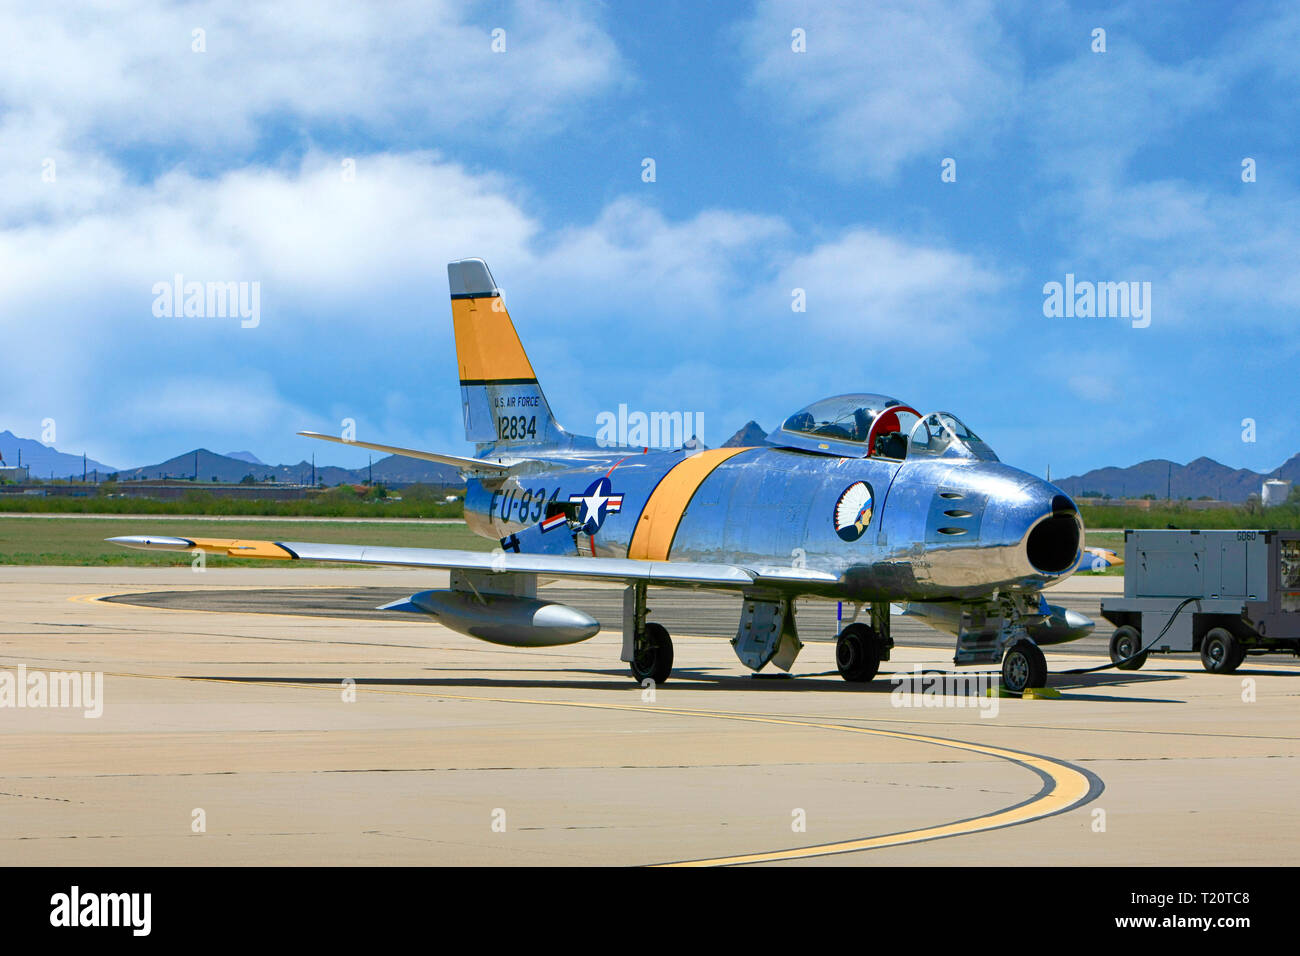 F-86, North American Sabre, Jet Fighter, Korean War